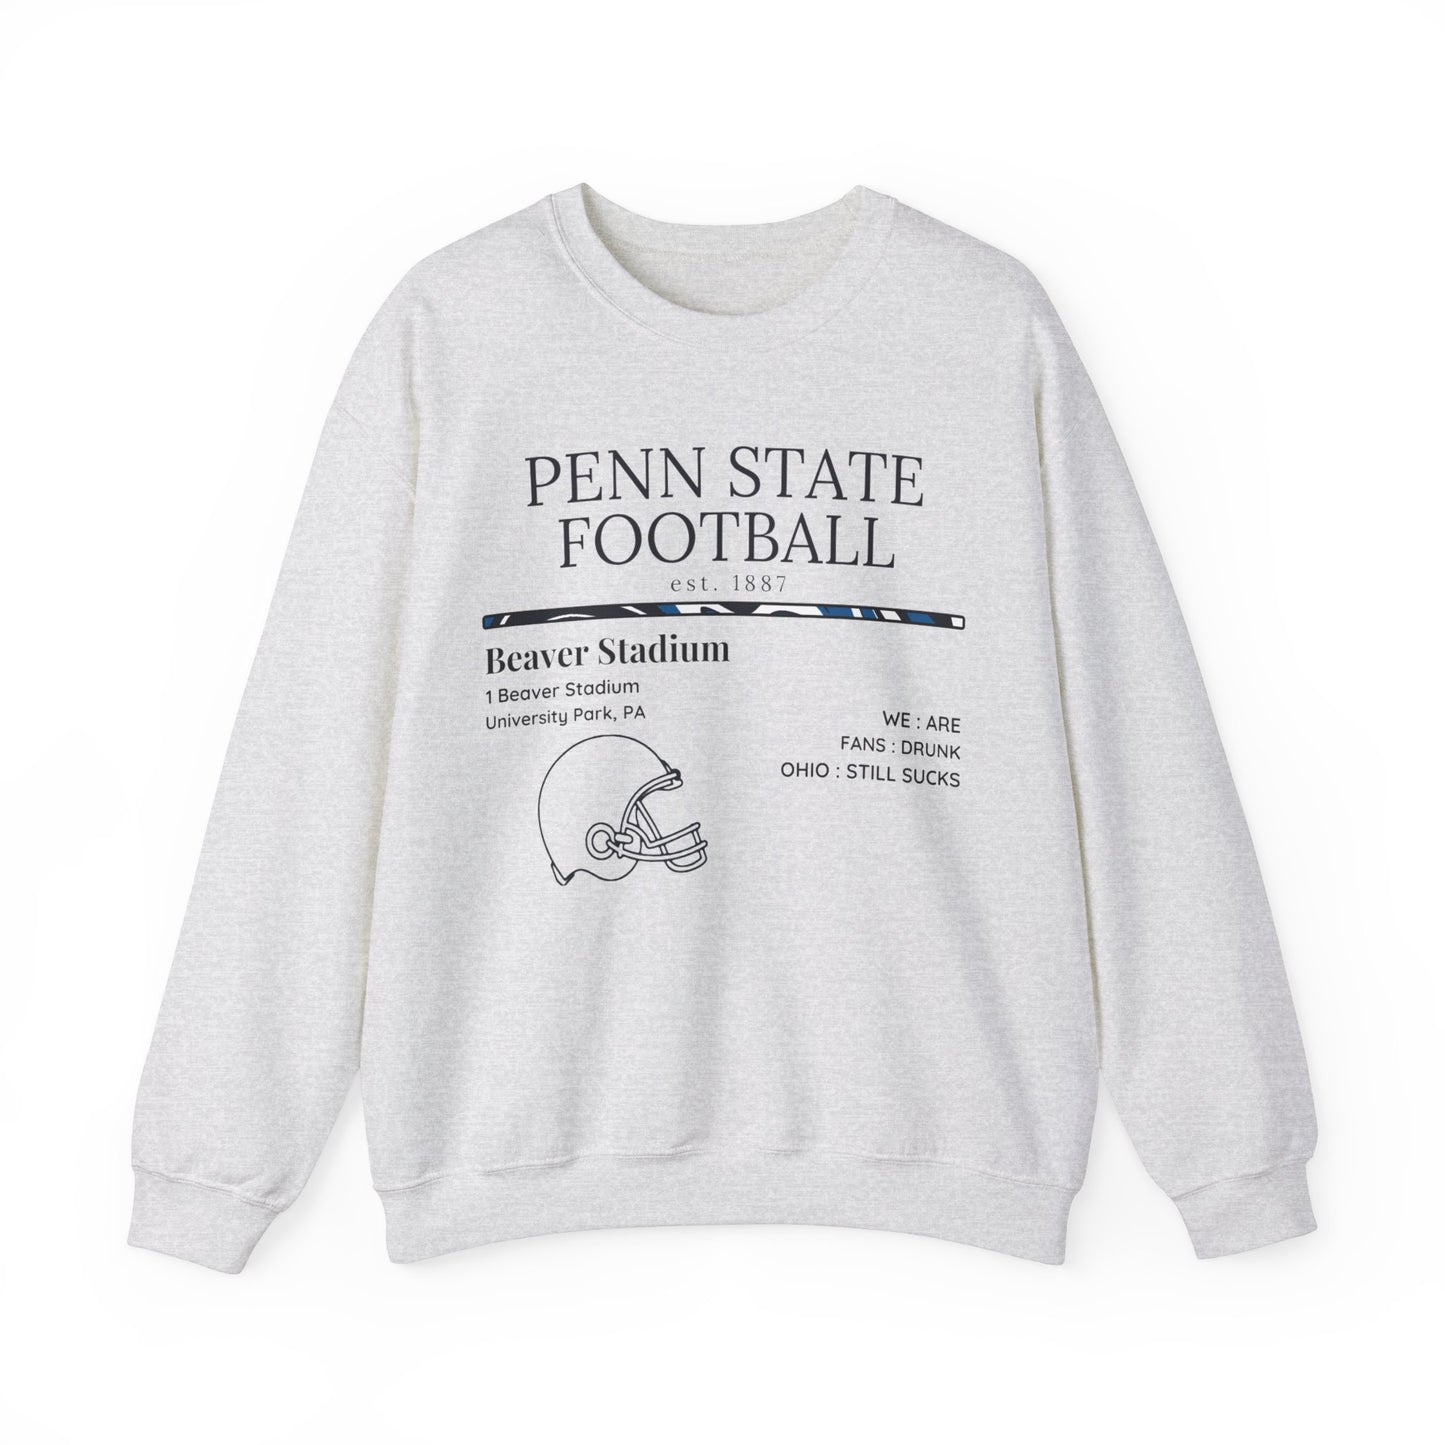 Penn State Football Sweatshirt